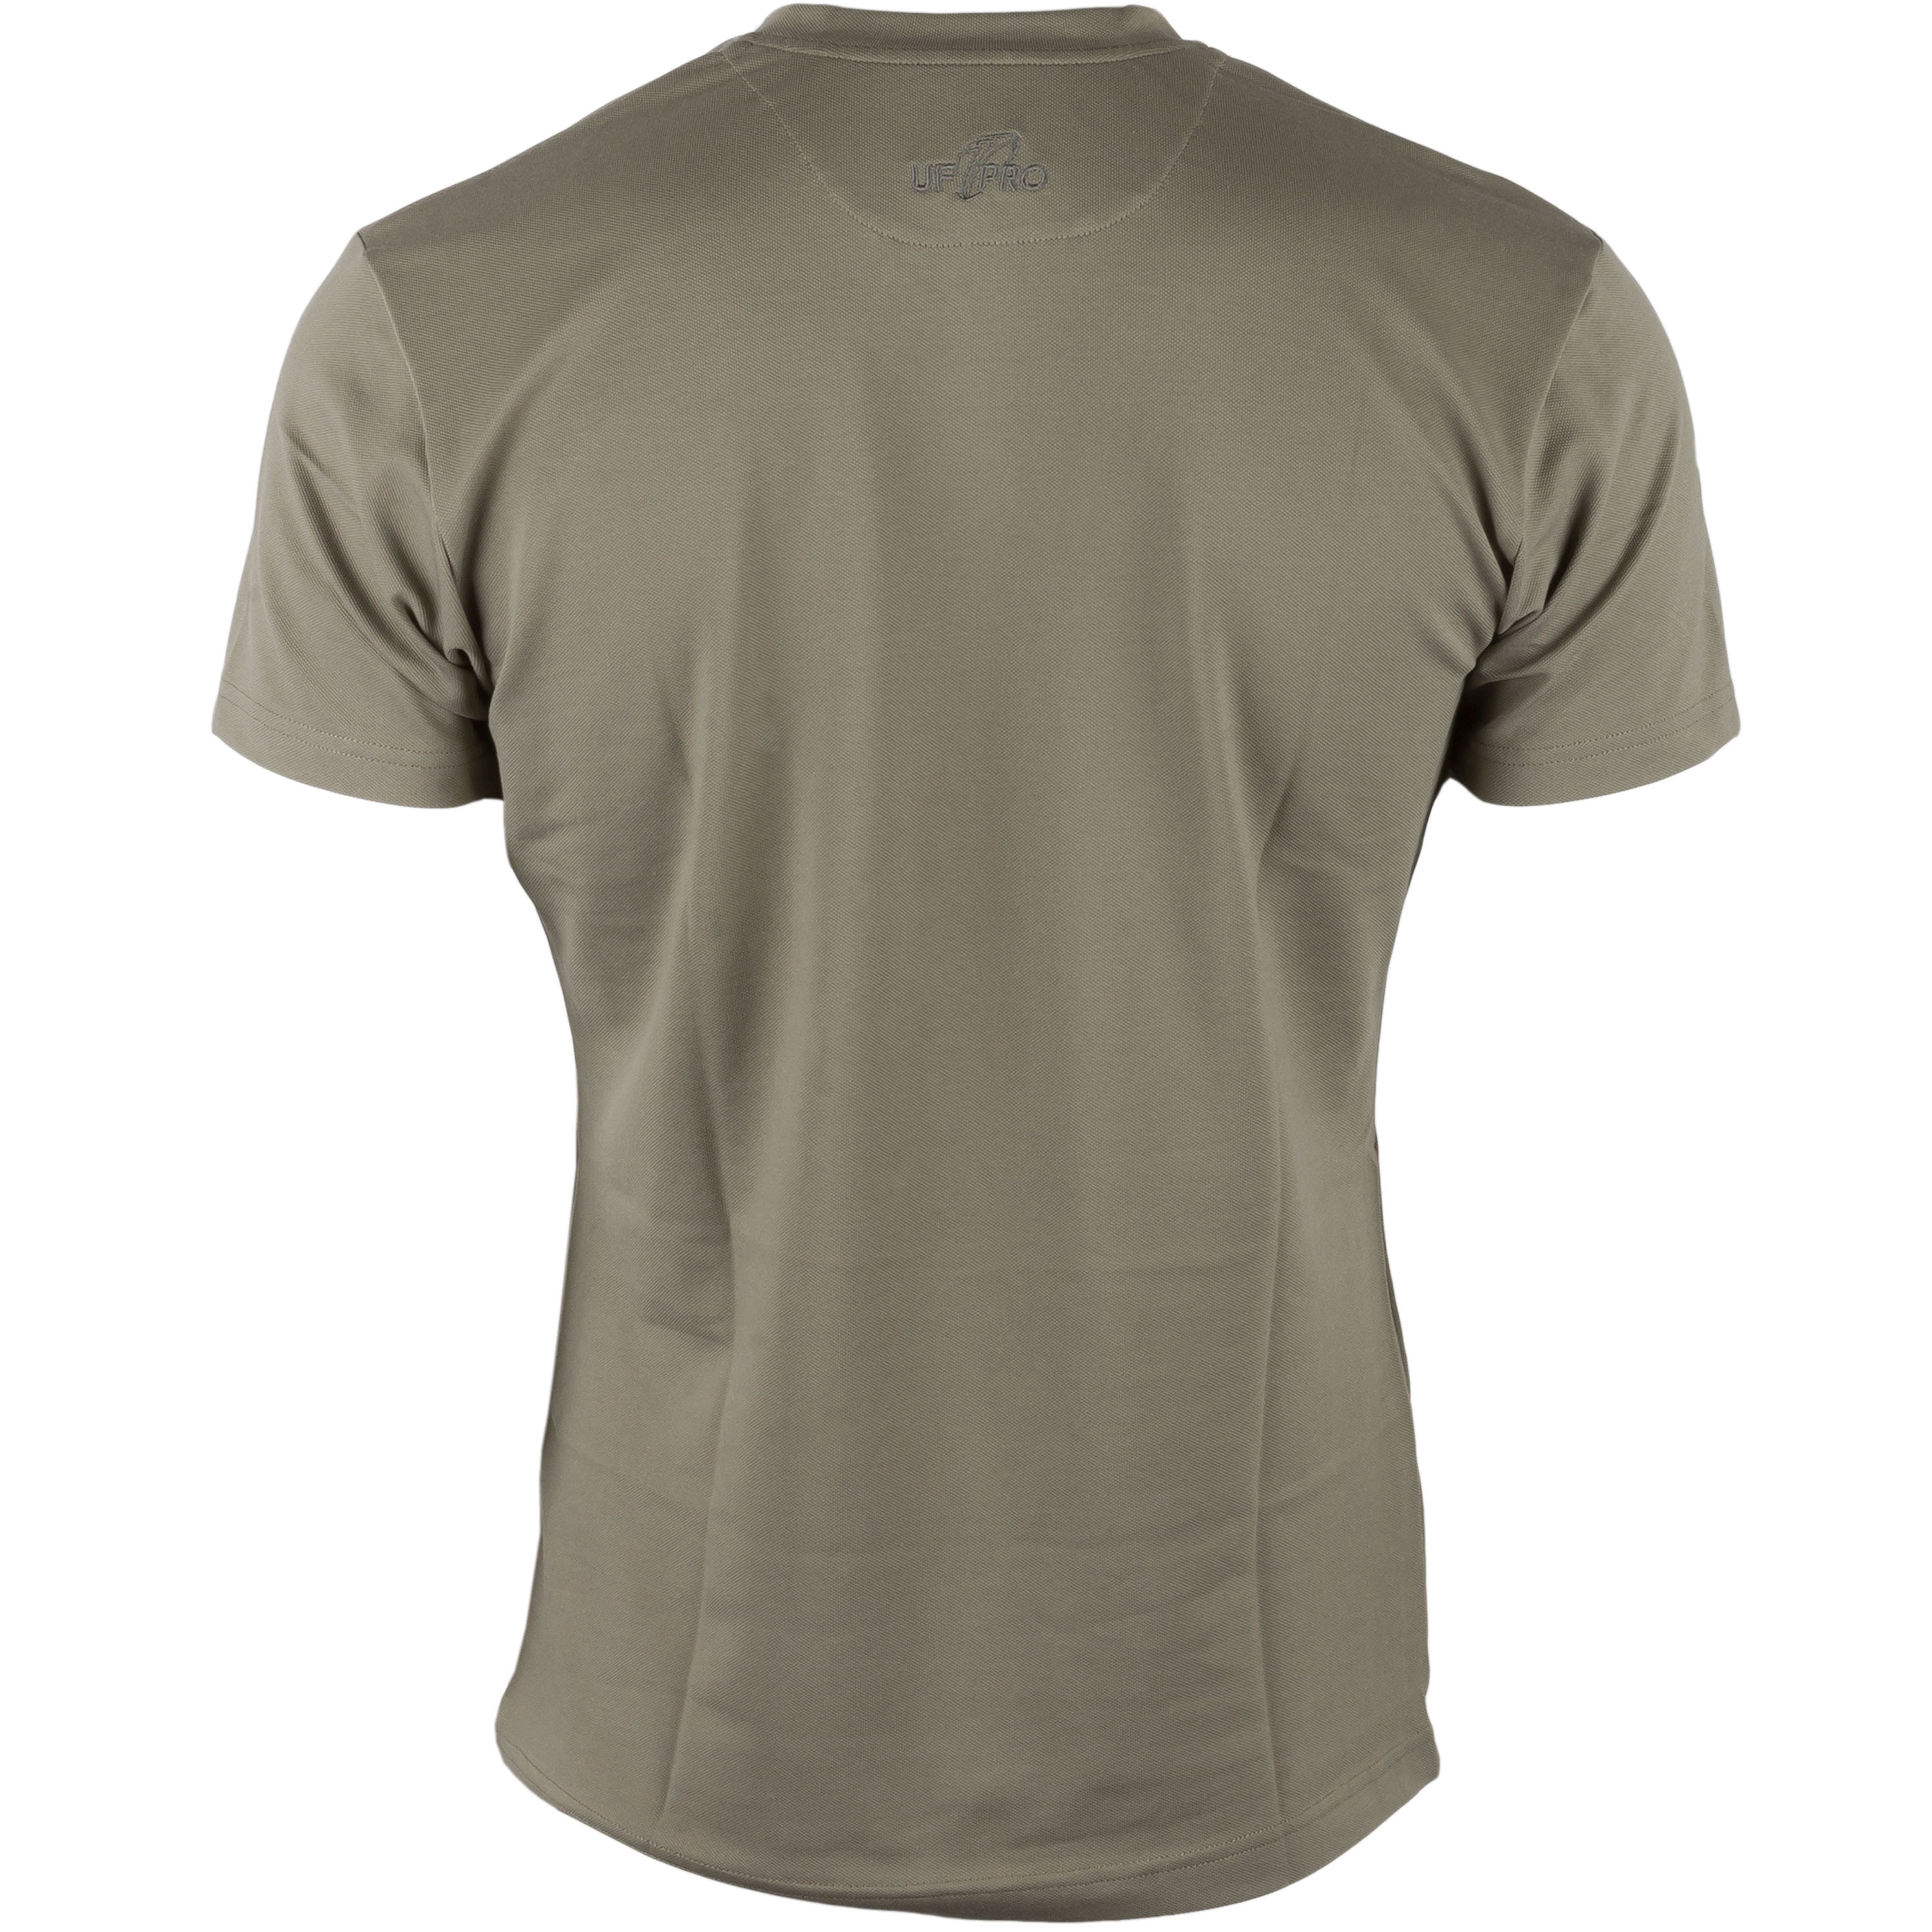 Purchase the UF Pro T-Shirt Urban desert gray by ASMC